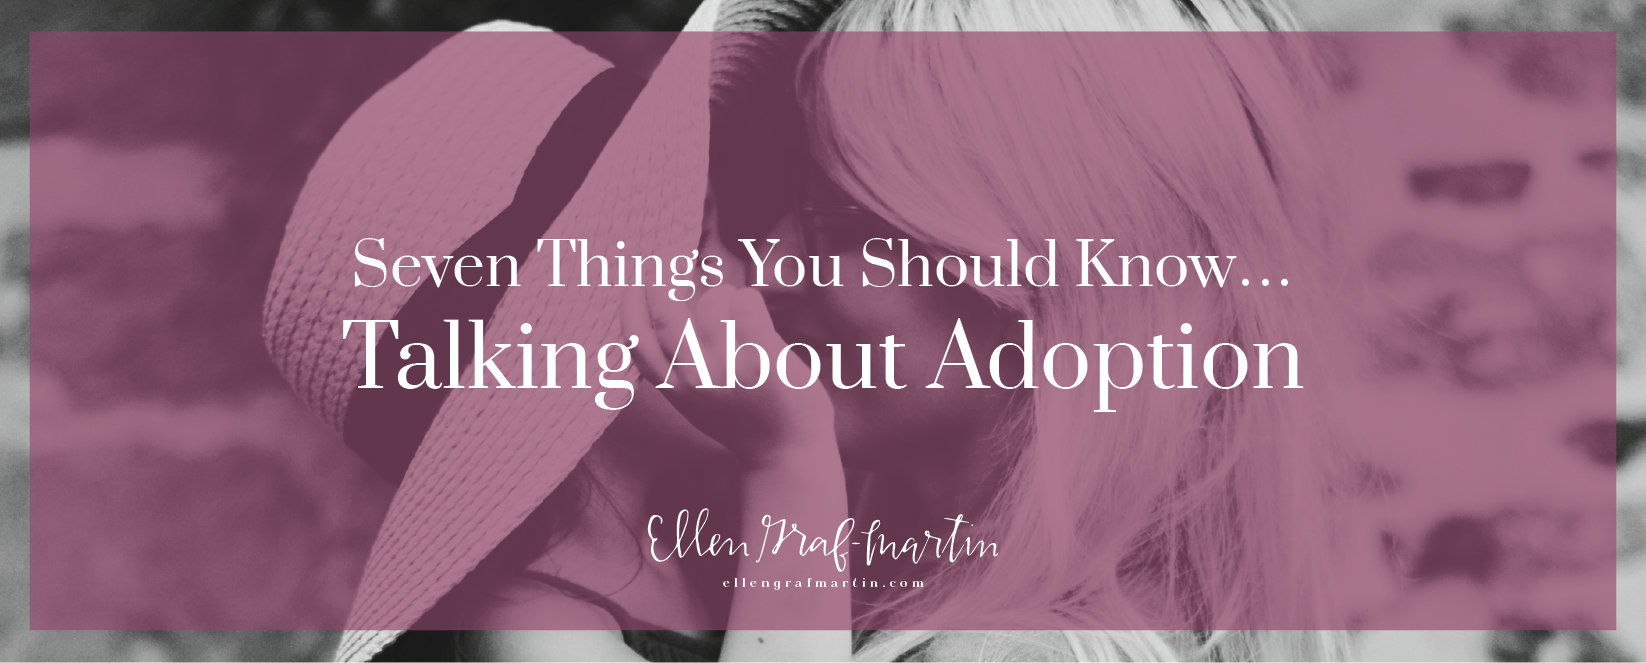 Talking About Adoption